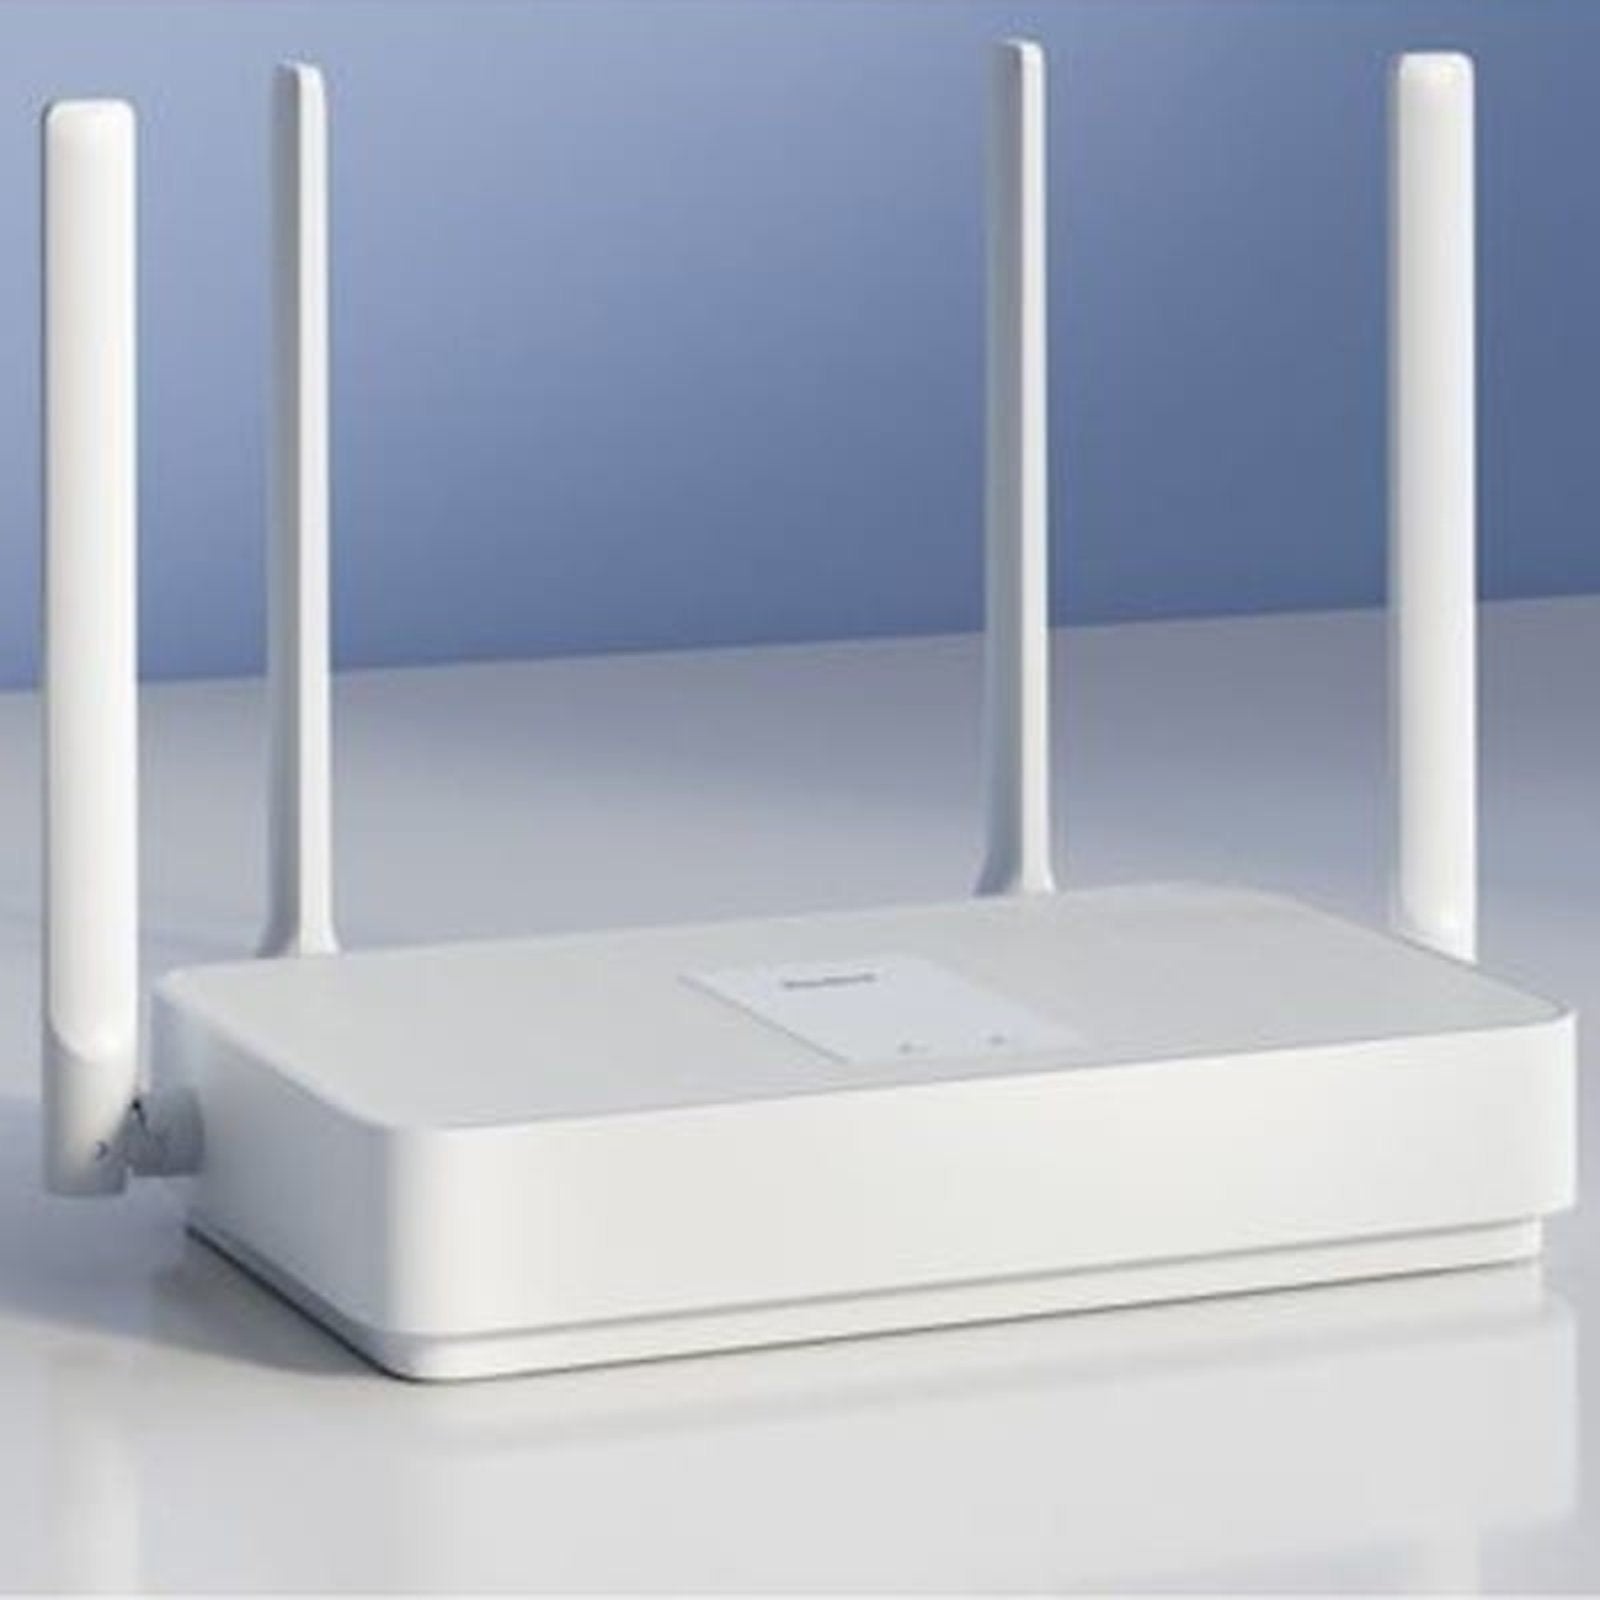 xiaomi-mi-router-ax1800